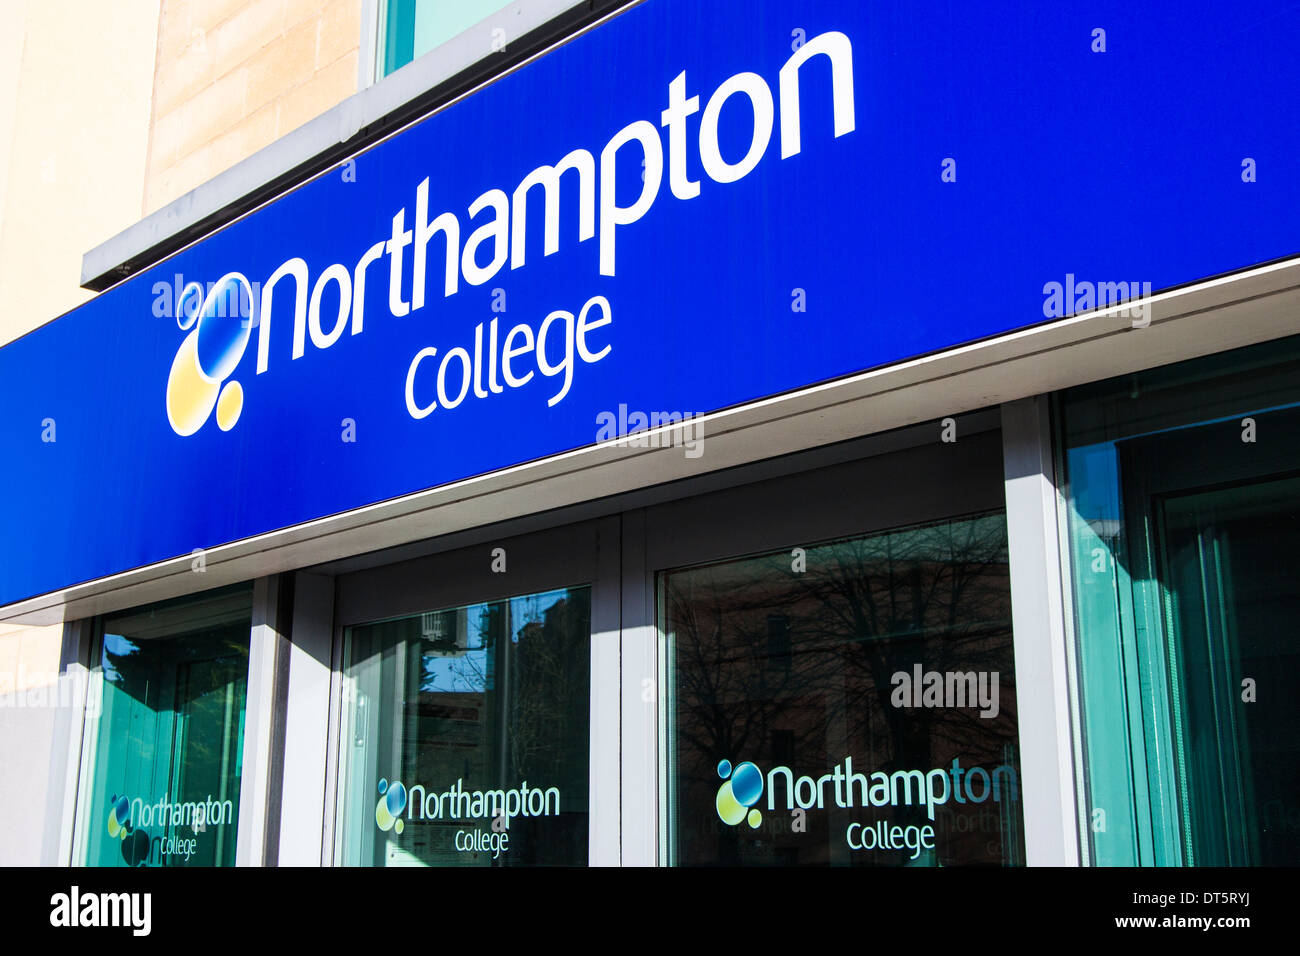 Northampton college of further education Stock Photo